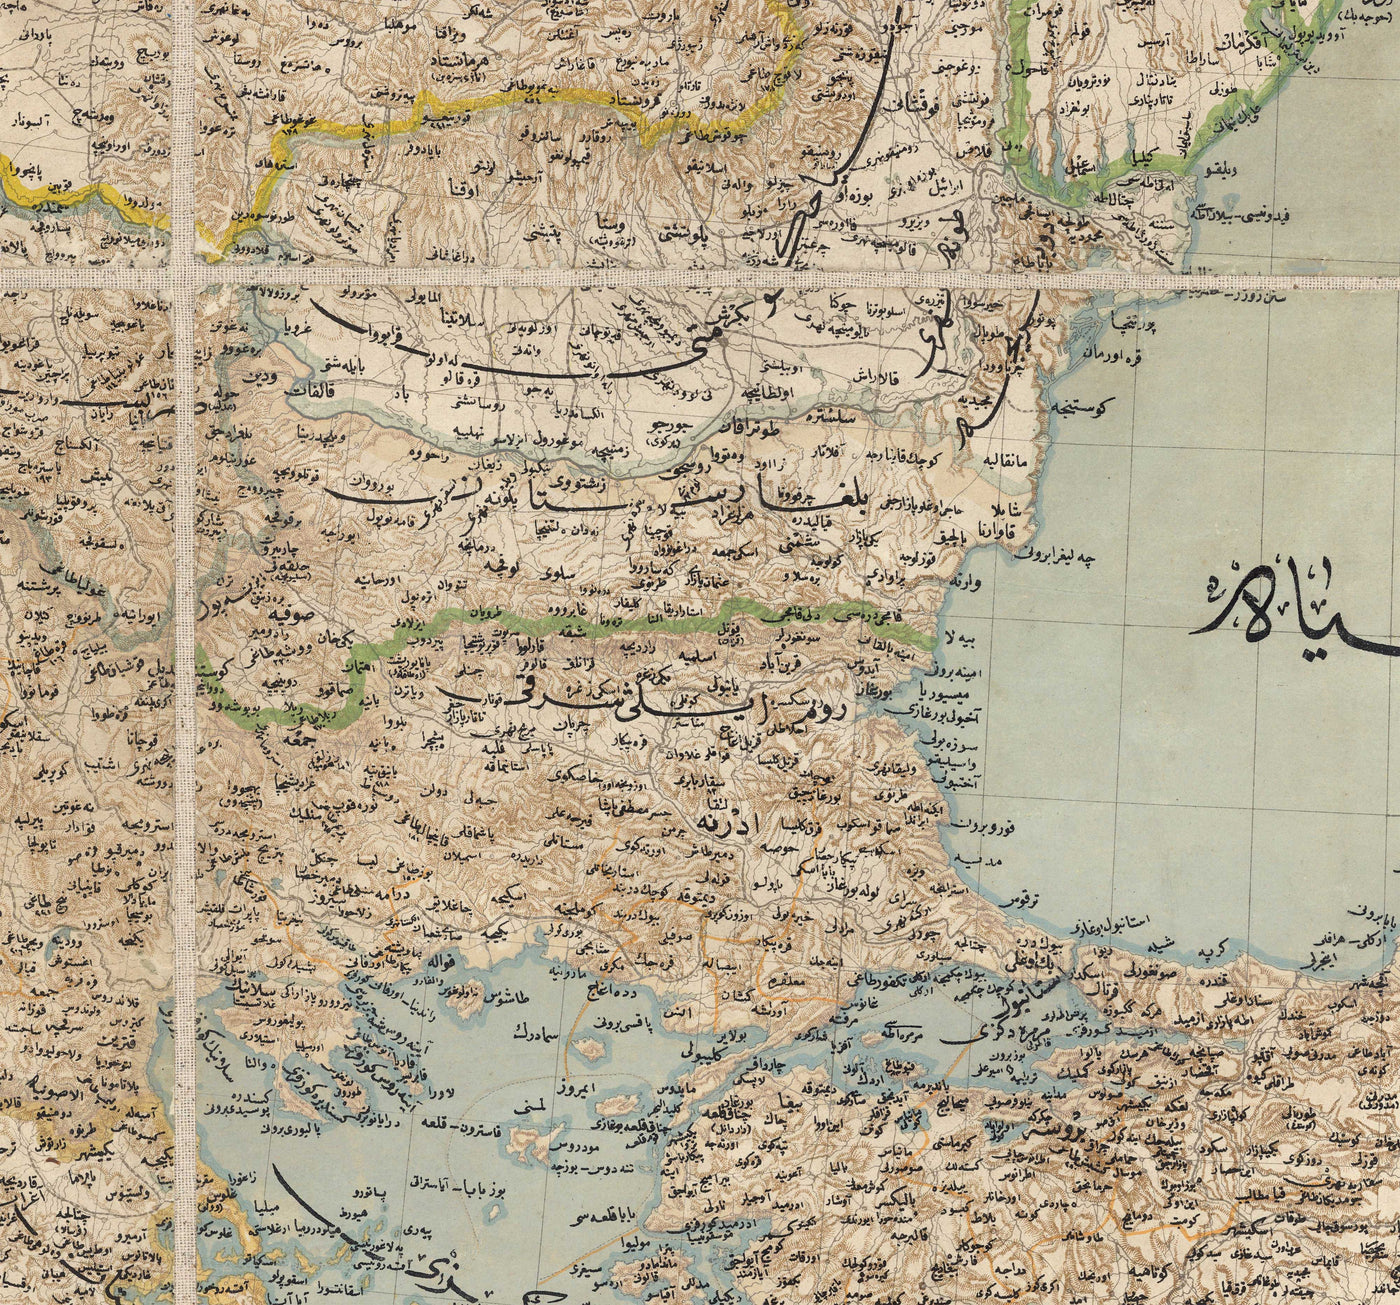 Alte Karte des Nahen Ostens in arabischer Schrift, 1890 - Osmanisches Reich, Balkan, Arabische Halbinsel, Schwarzmeer